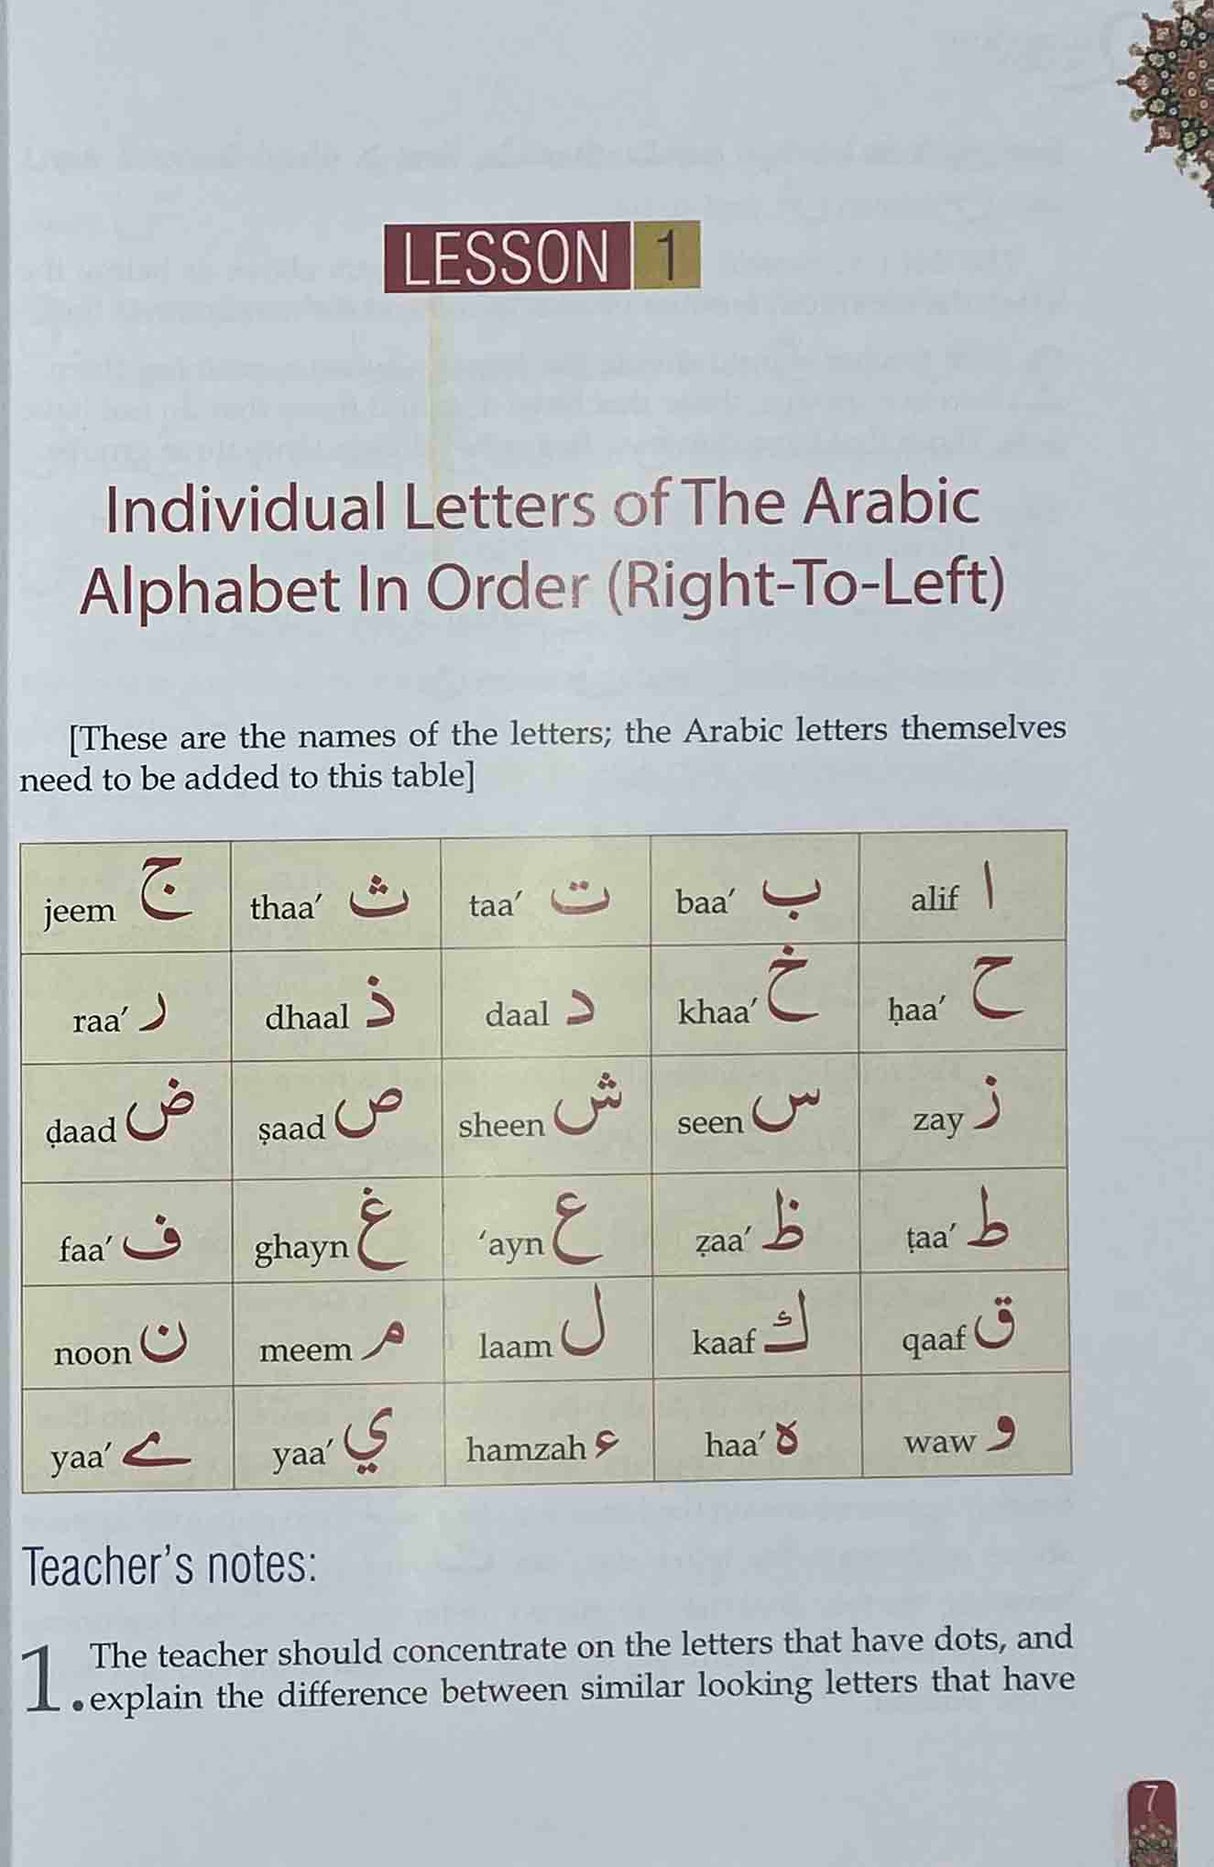 Al-Qaaidah Al-Quraaniyyah Learn To  Read Arabic Without A Teacher. Qaidah